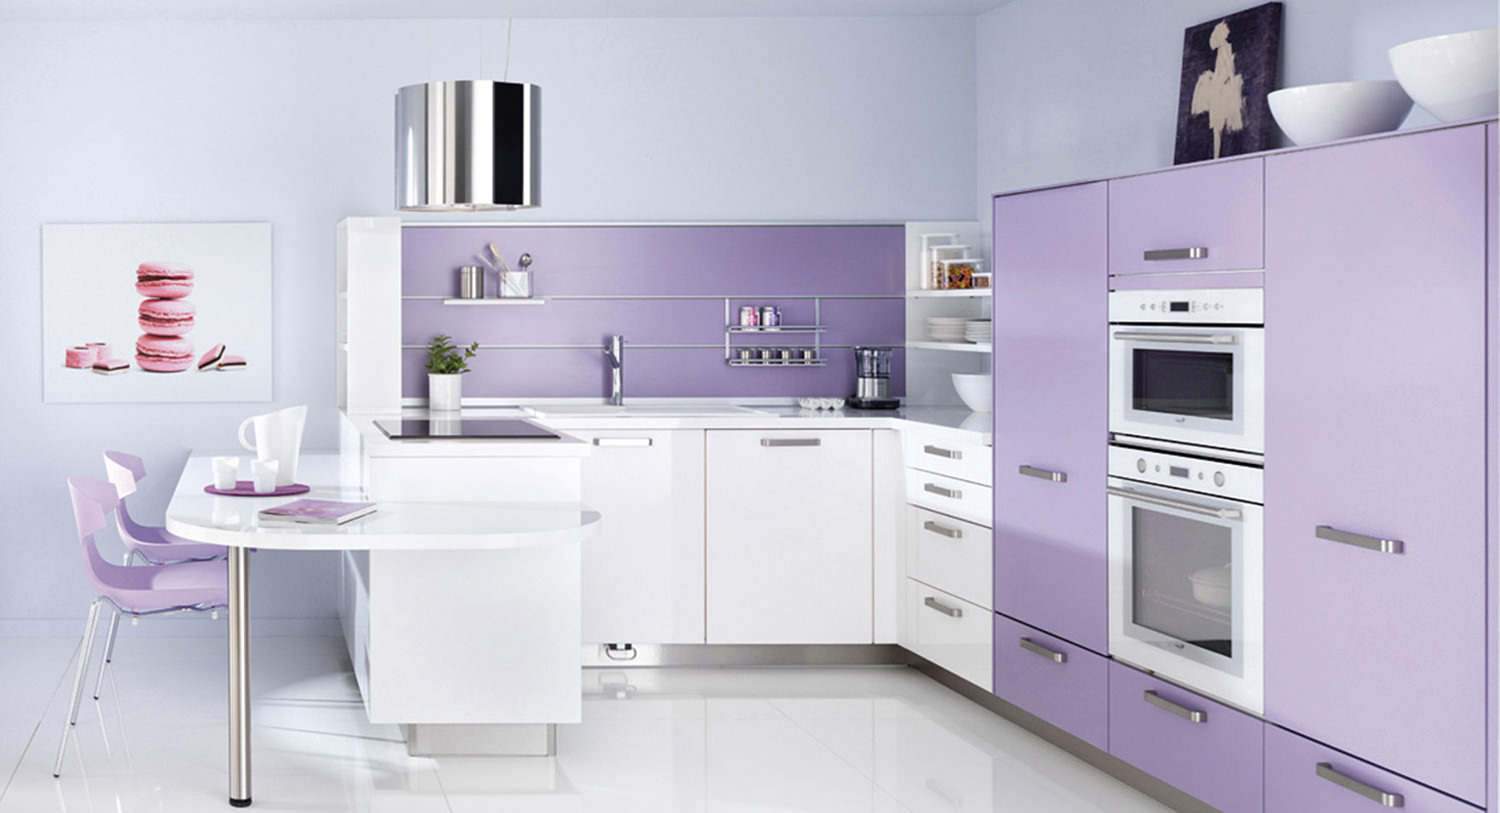 Pale purple kitchen